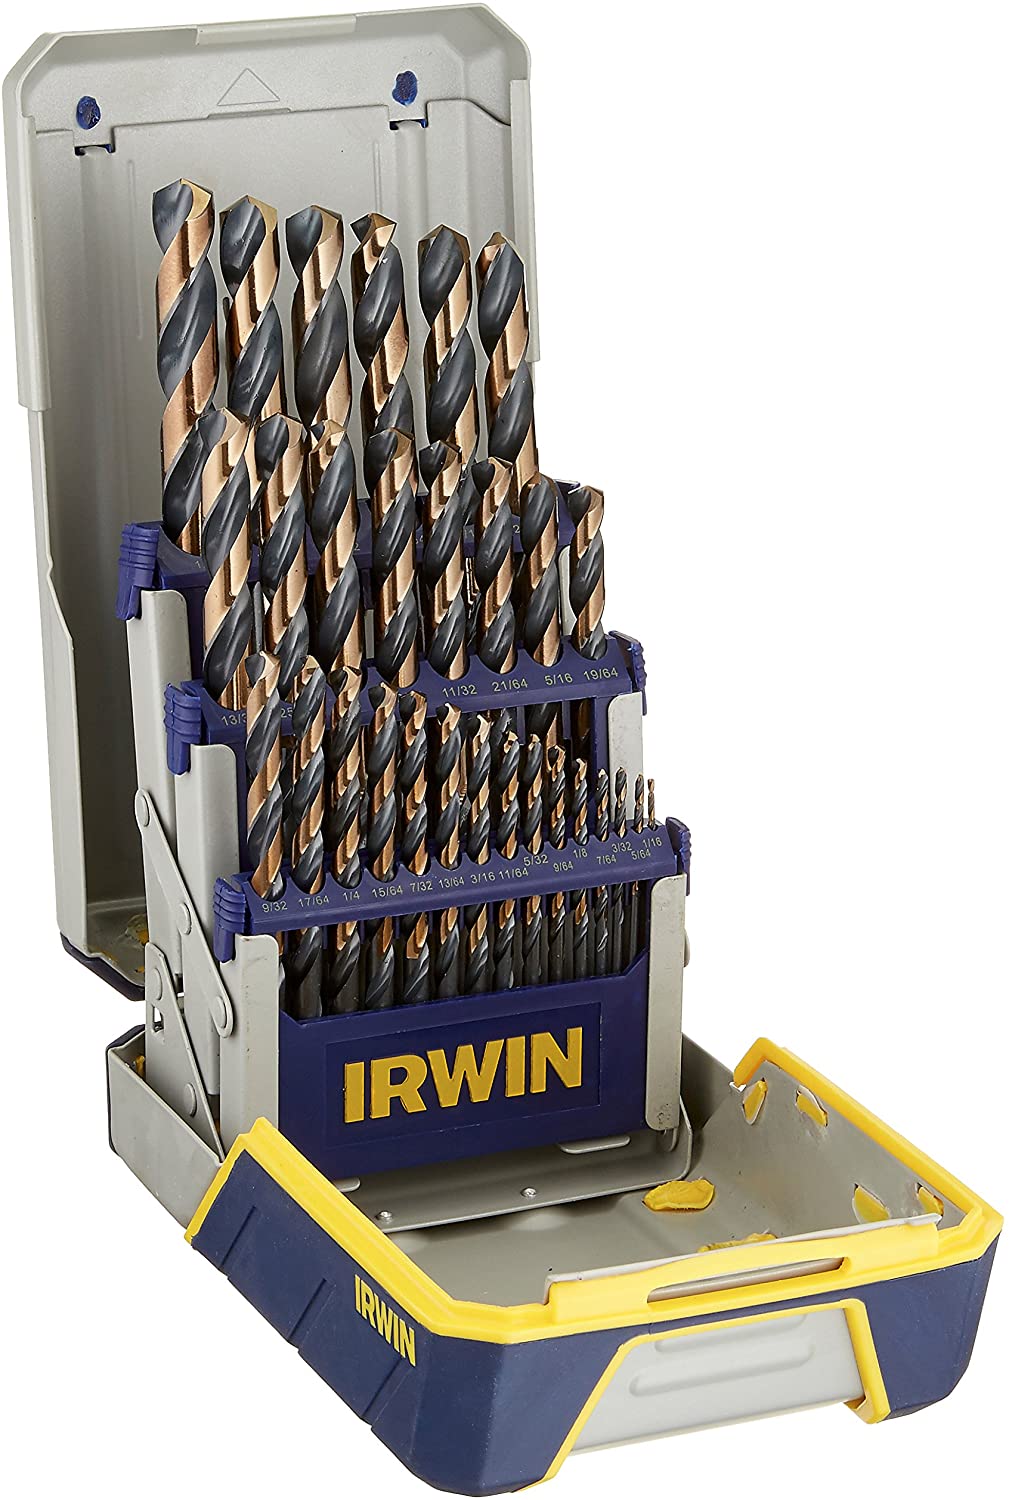 Irwin Black & Gold Metal Index Drill Bit Set - 29 Piece Shop Equipment - Cleanflow